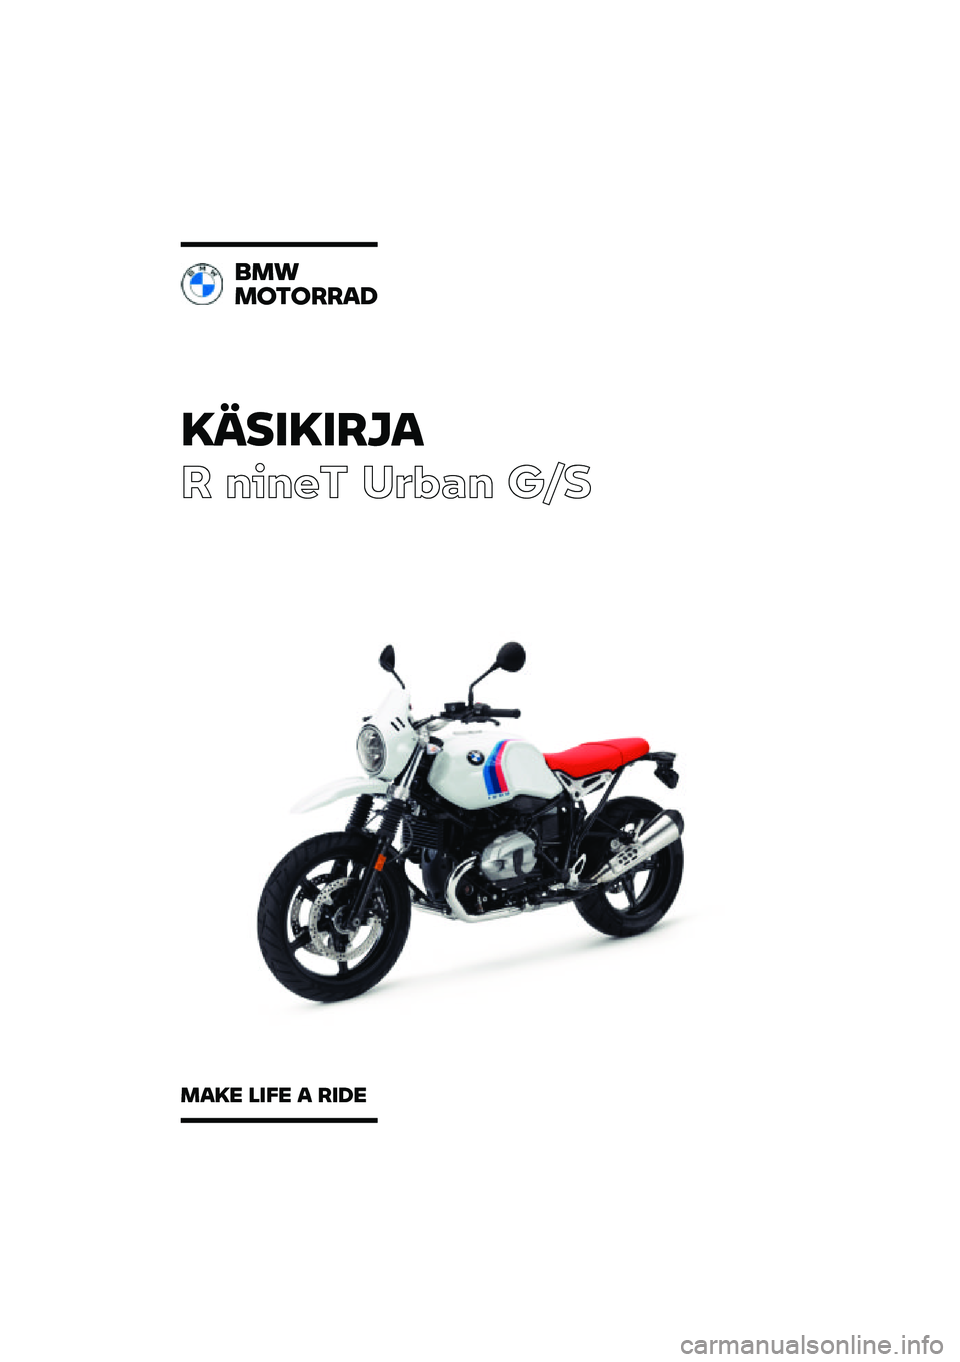 BMW MOTORRAD R NINE T URVAN G/S 2021  Käsikirja (in Finnish) �������\b�	�
� ����� ��\b�	�
� ��\f�
�
��\f
��
��
�\b�\b��
���� ���� � �\b��� 